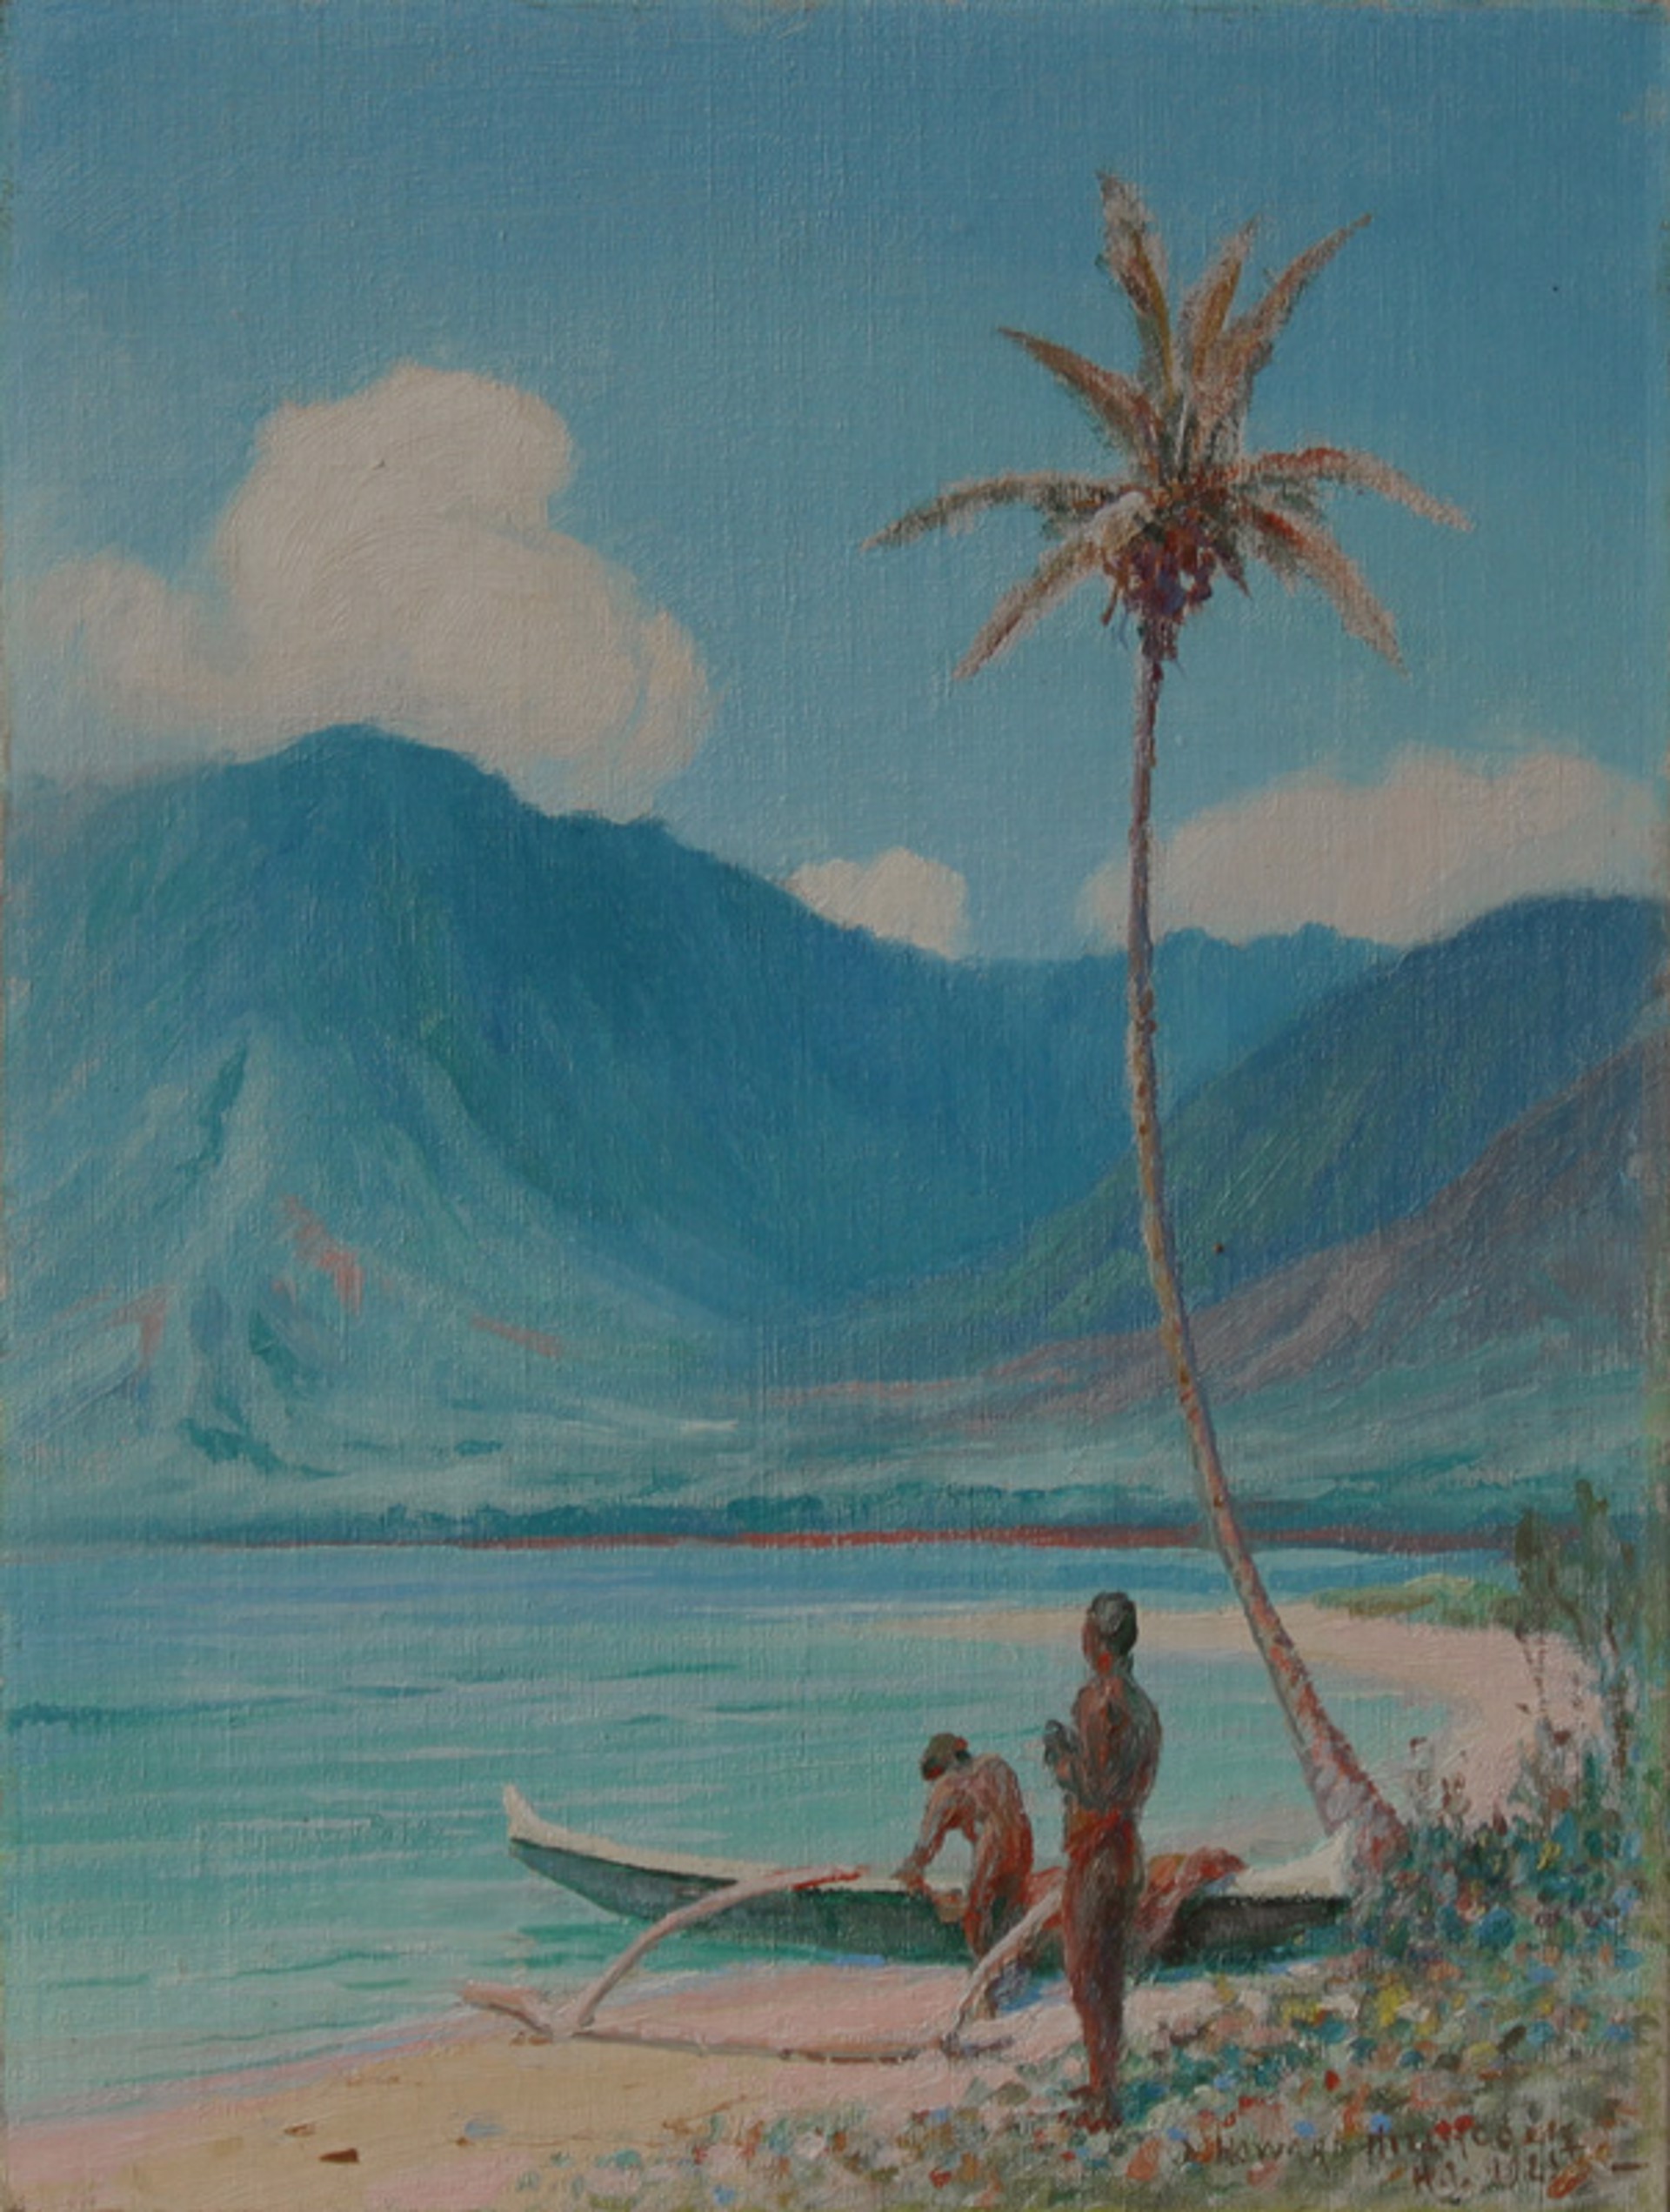 On the Beach, Leeward Oahu by D. Howard Hitchcock